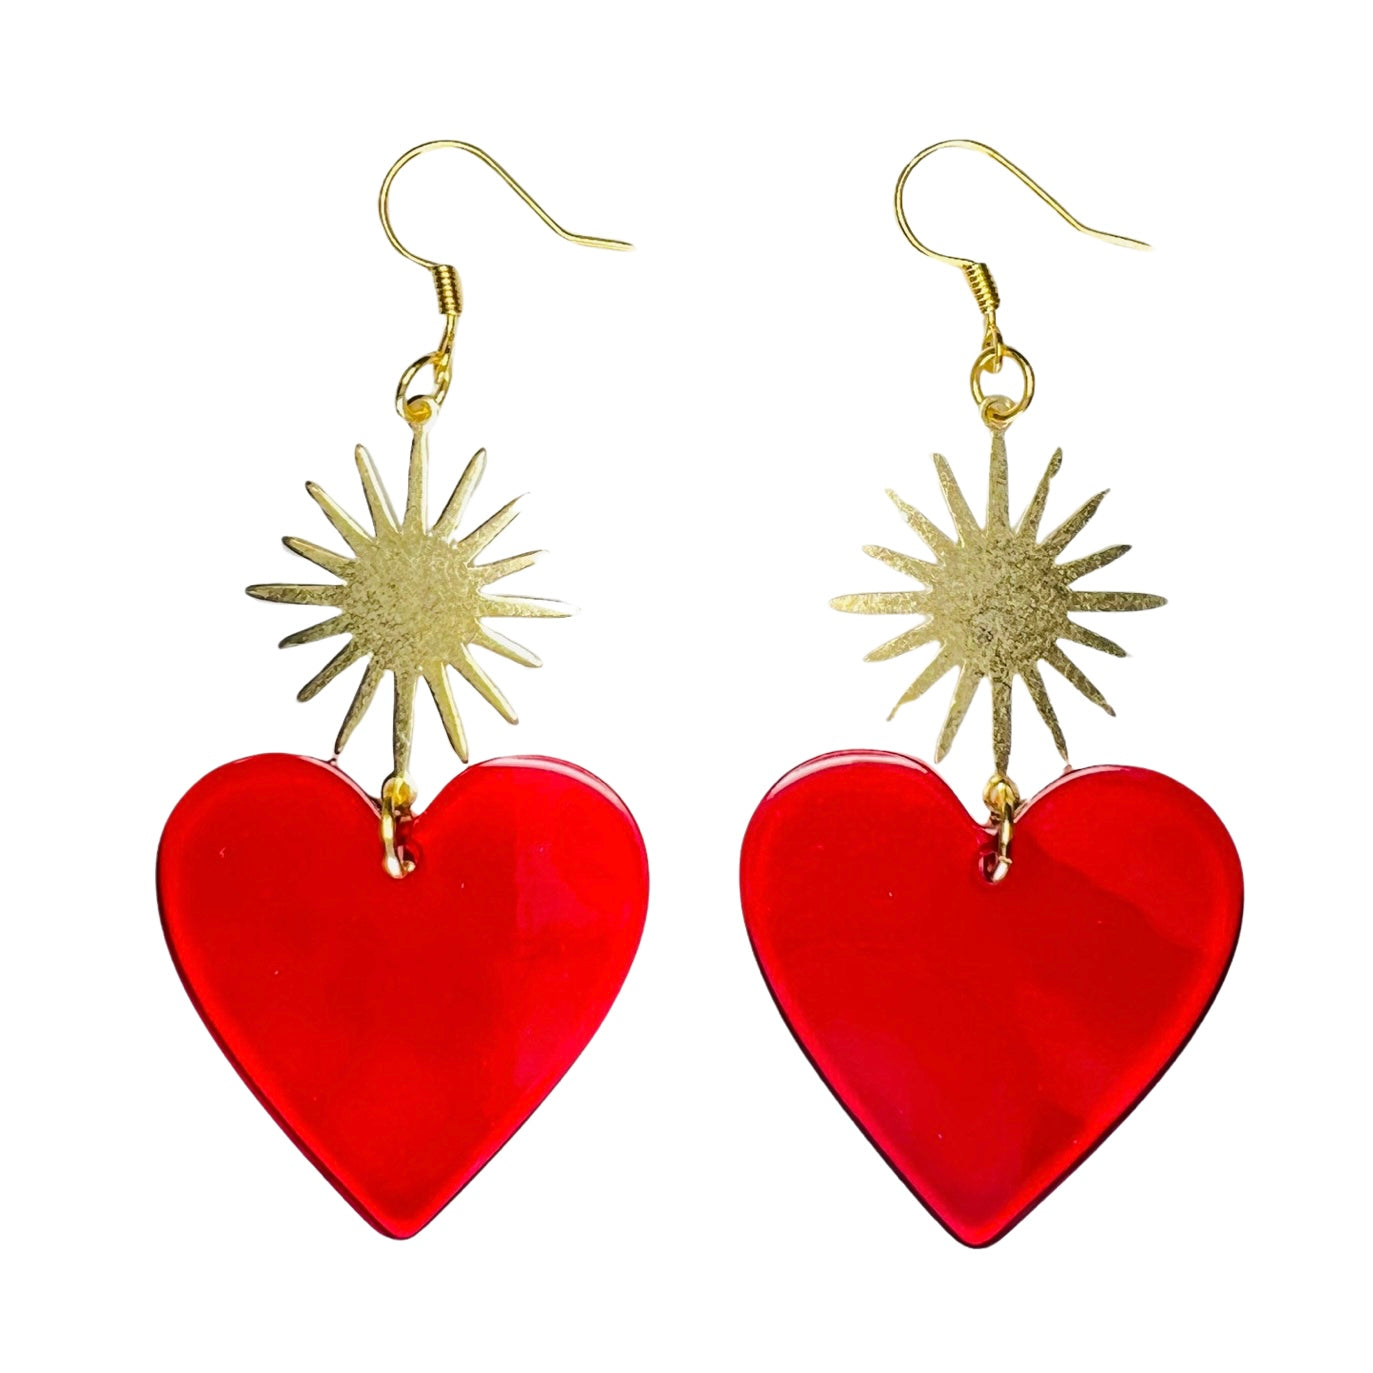 set of red resin heart earrings with a brass sunburst